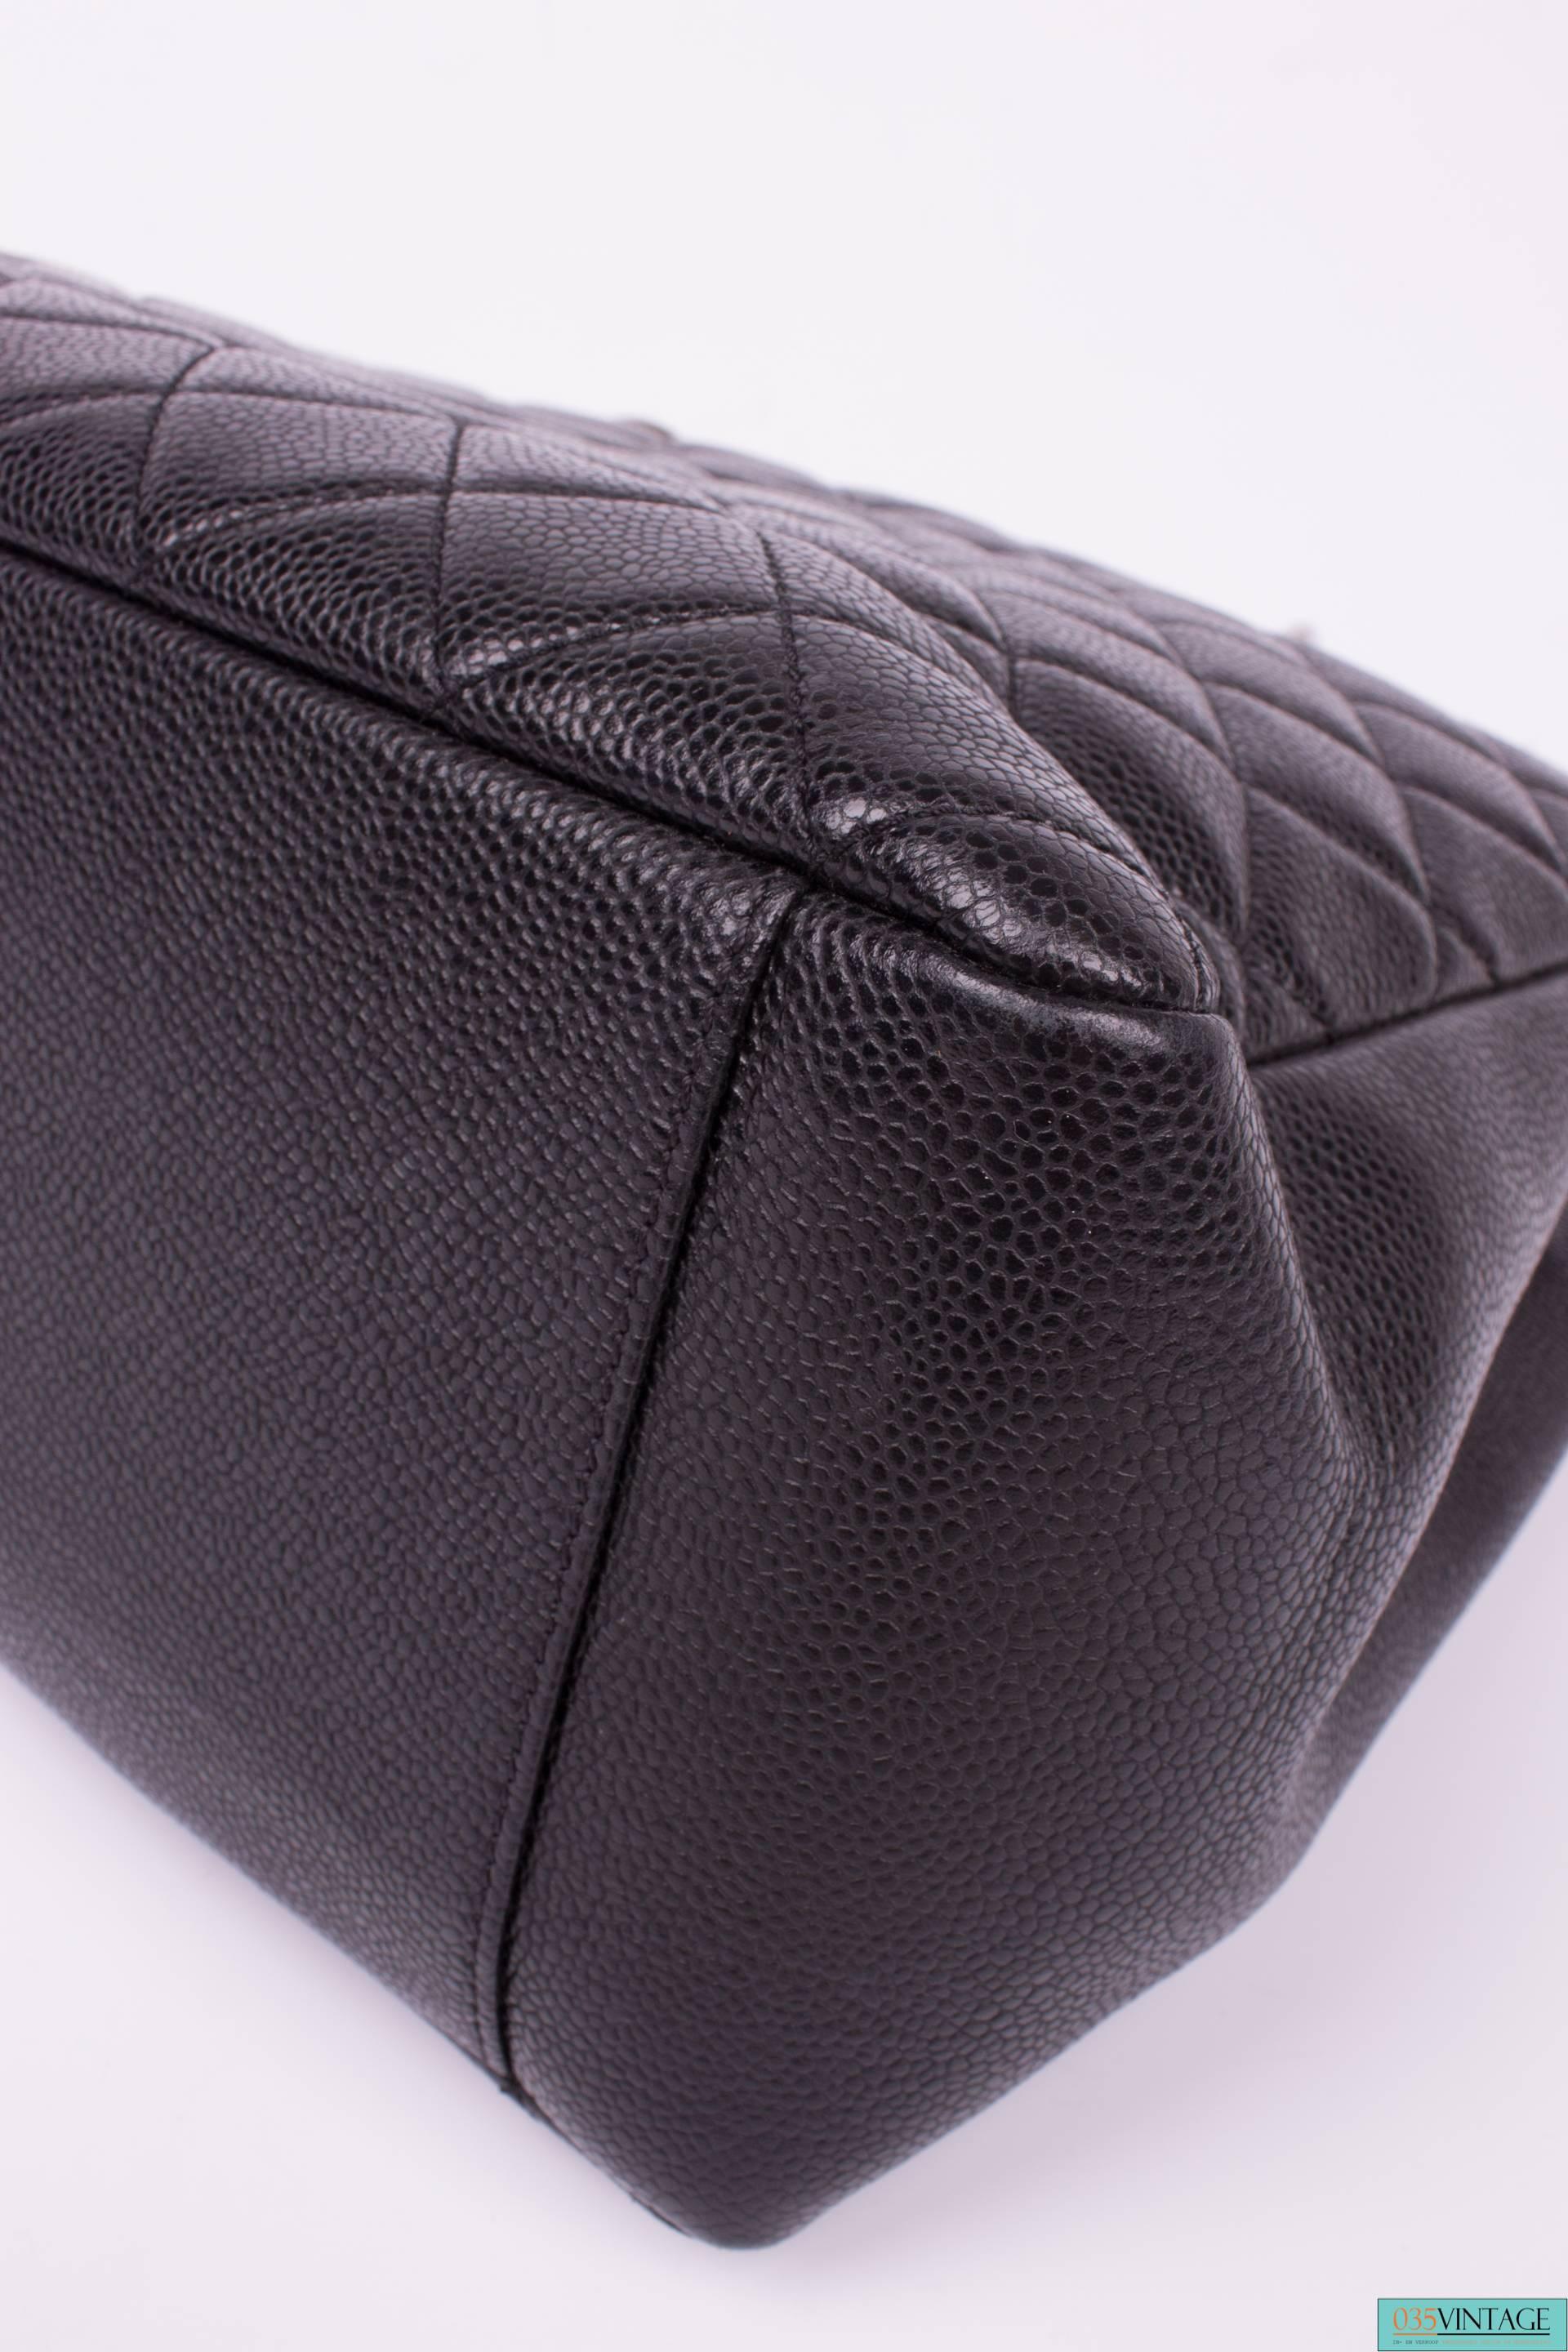 Chanel Grand Shopper Bag - black caviar leather 2